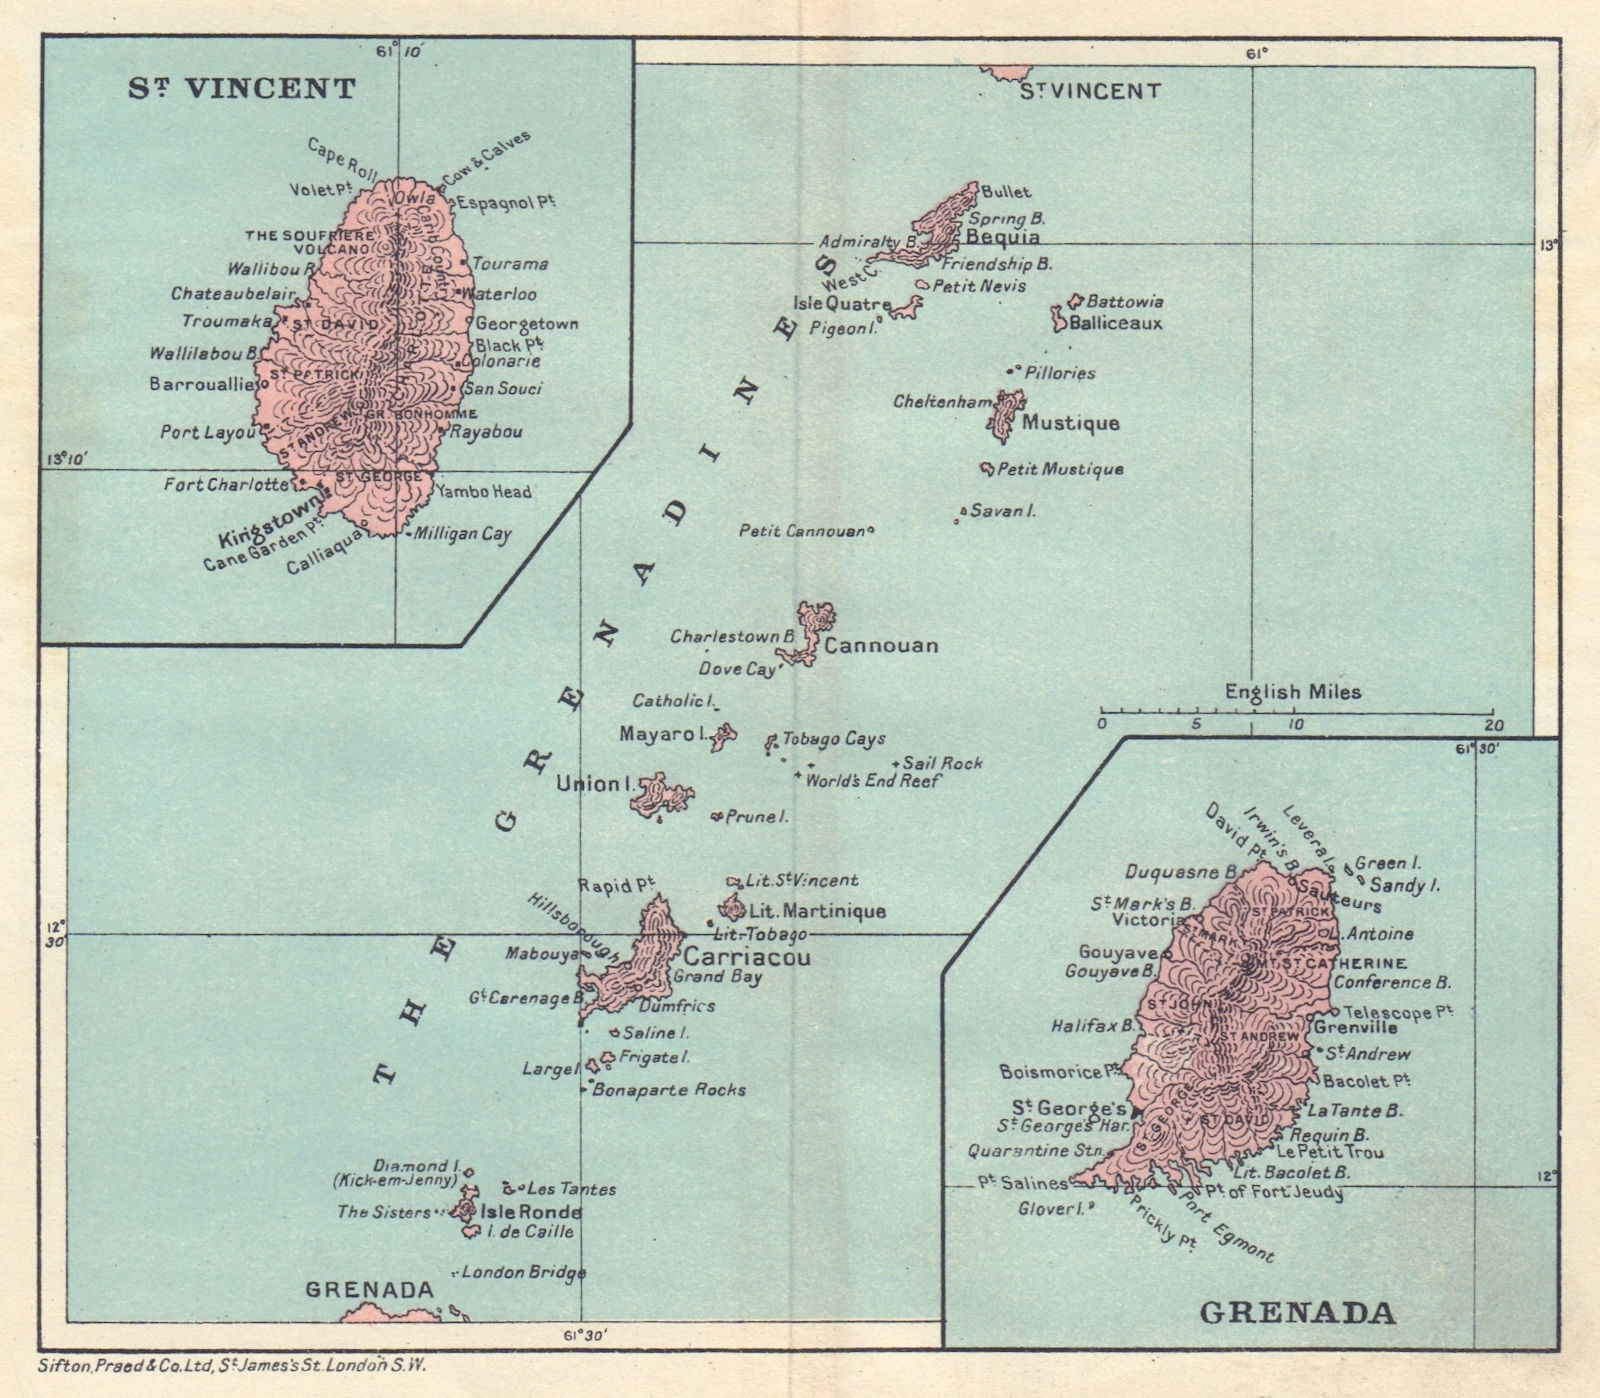 ST VINCENT, GRENADA & THE GRENADINES. Lesser Antilles. West Indies 1923 map